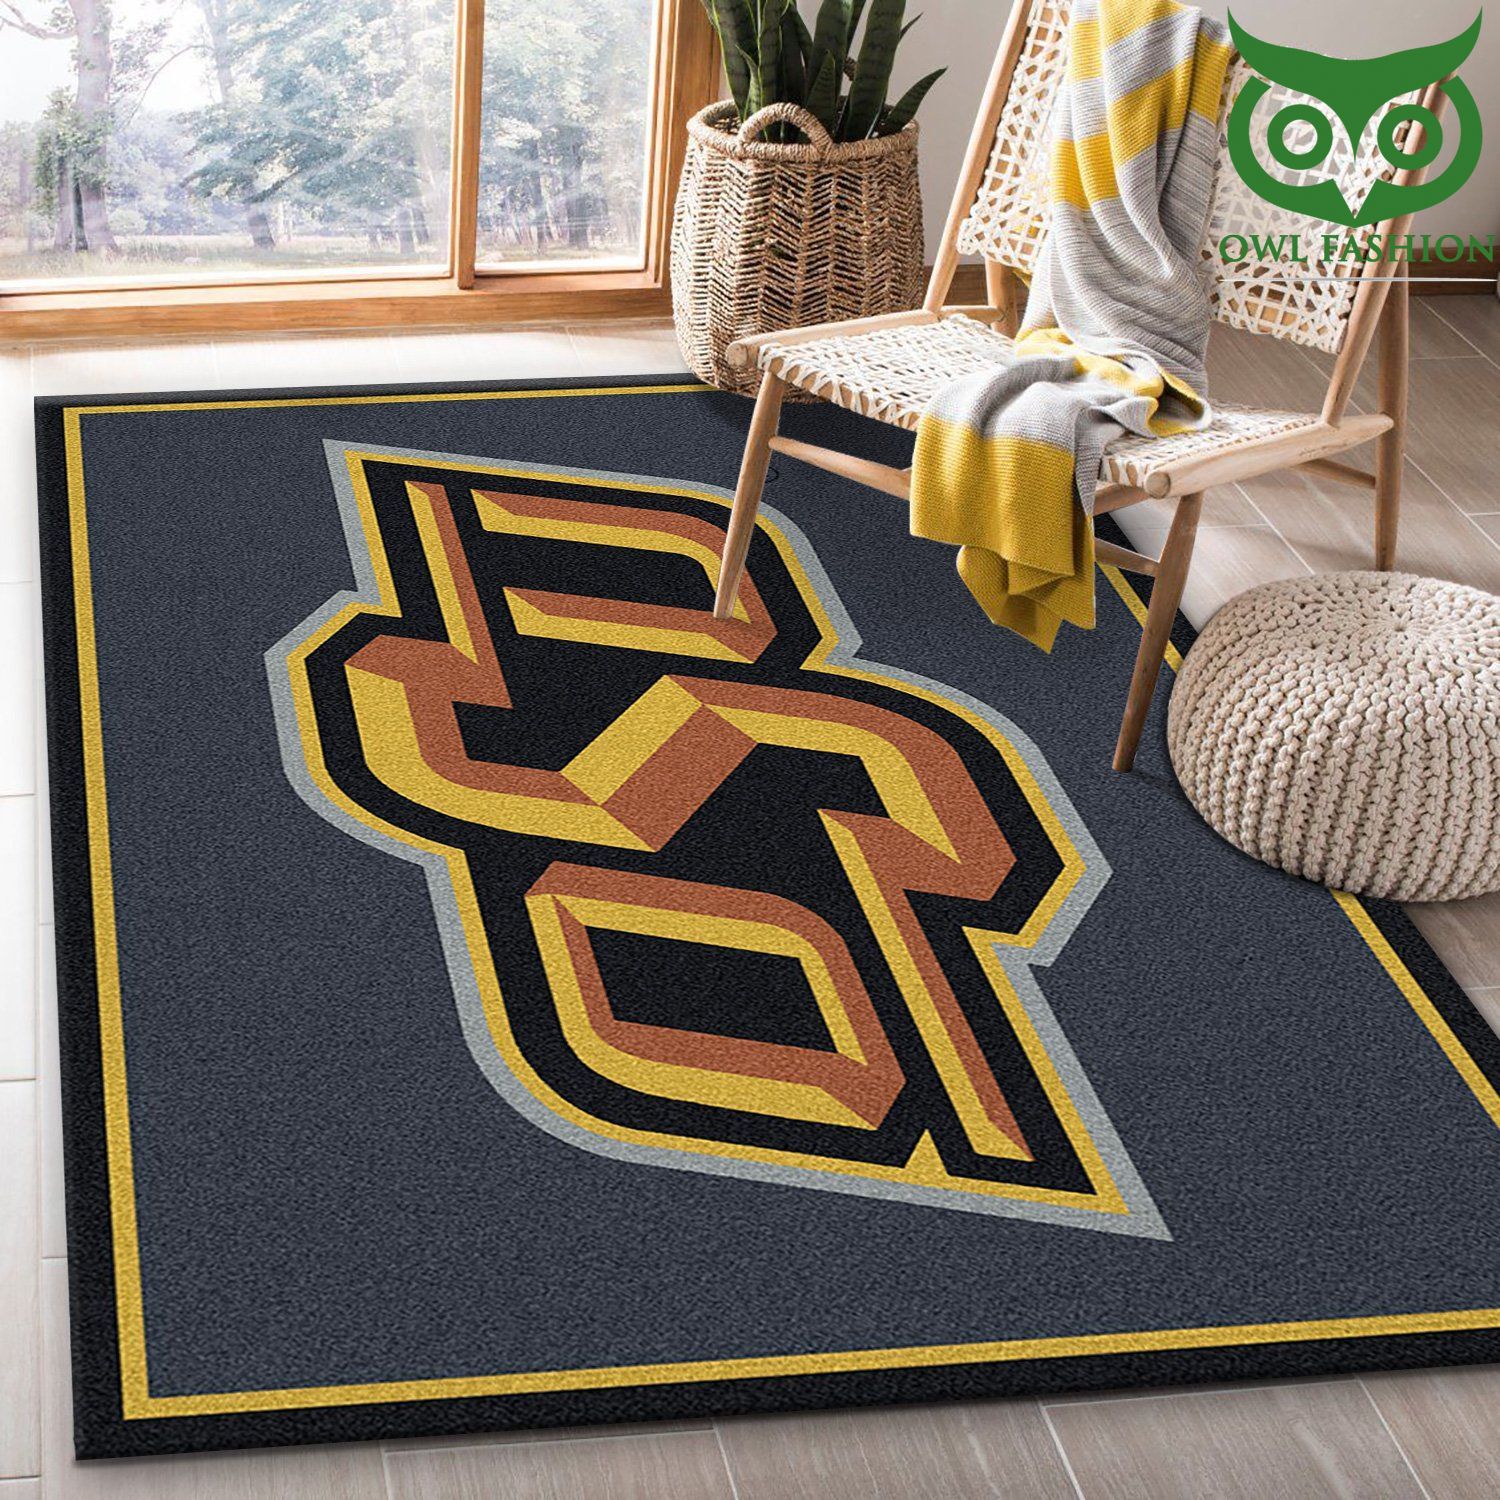 College Spirit Oklahoma State Sport Area home decor carpet rug 